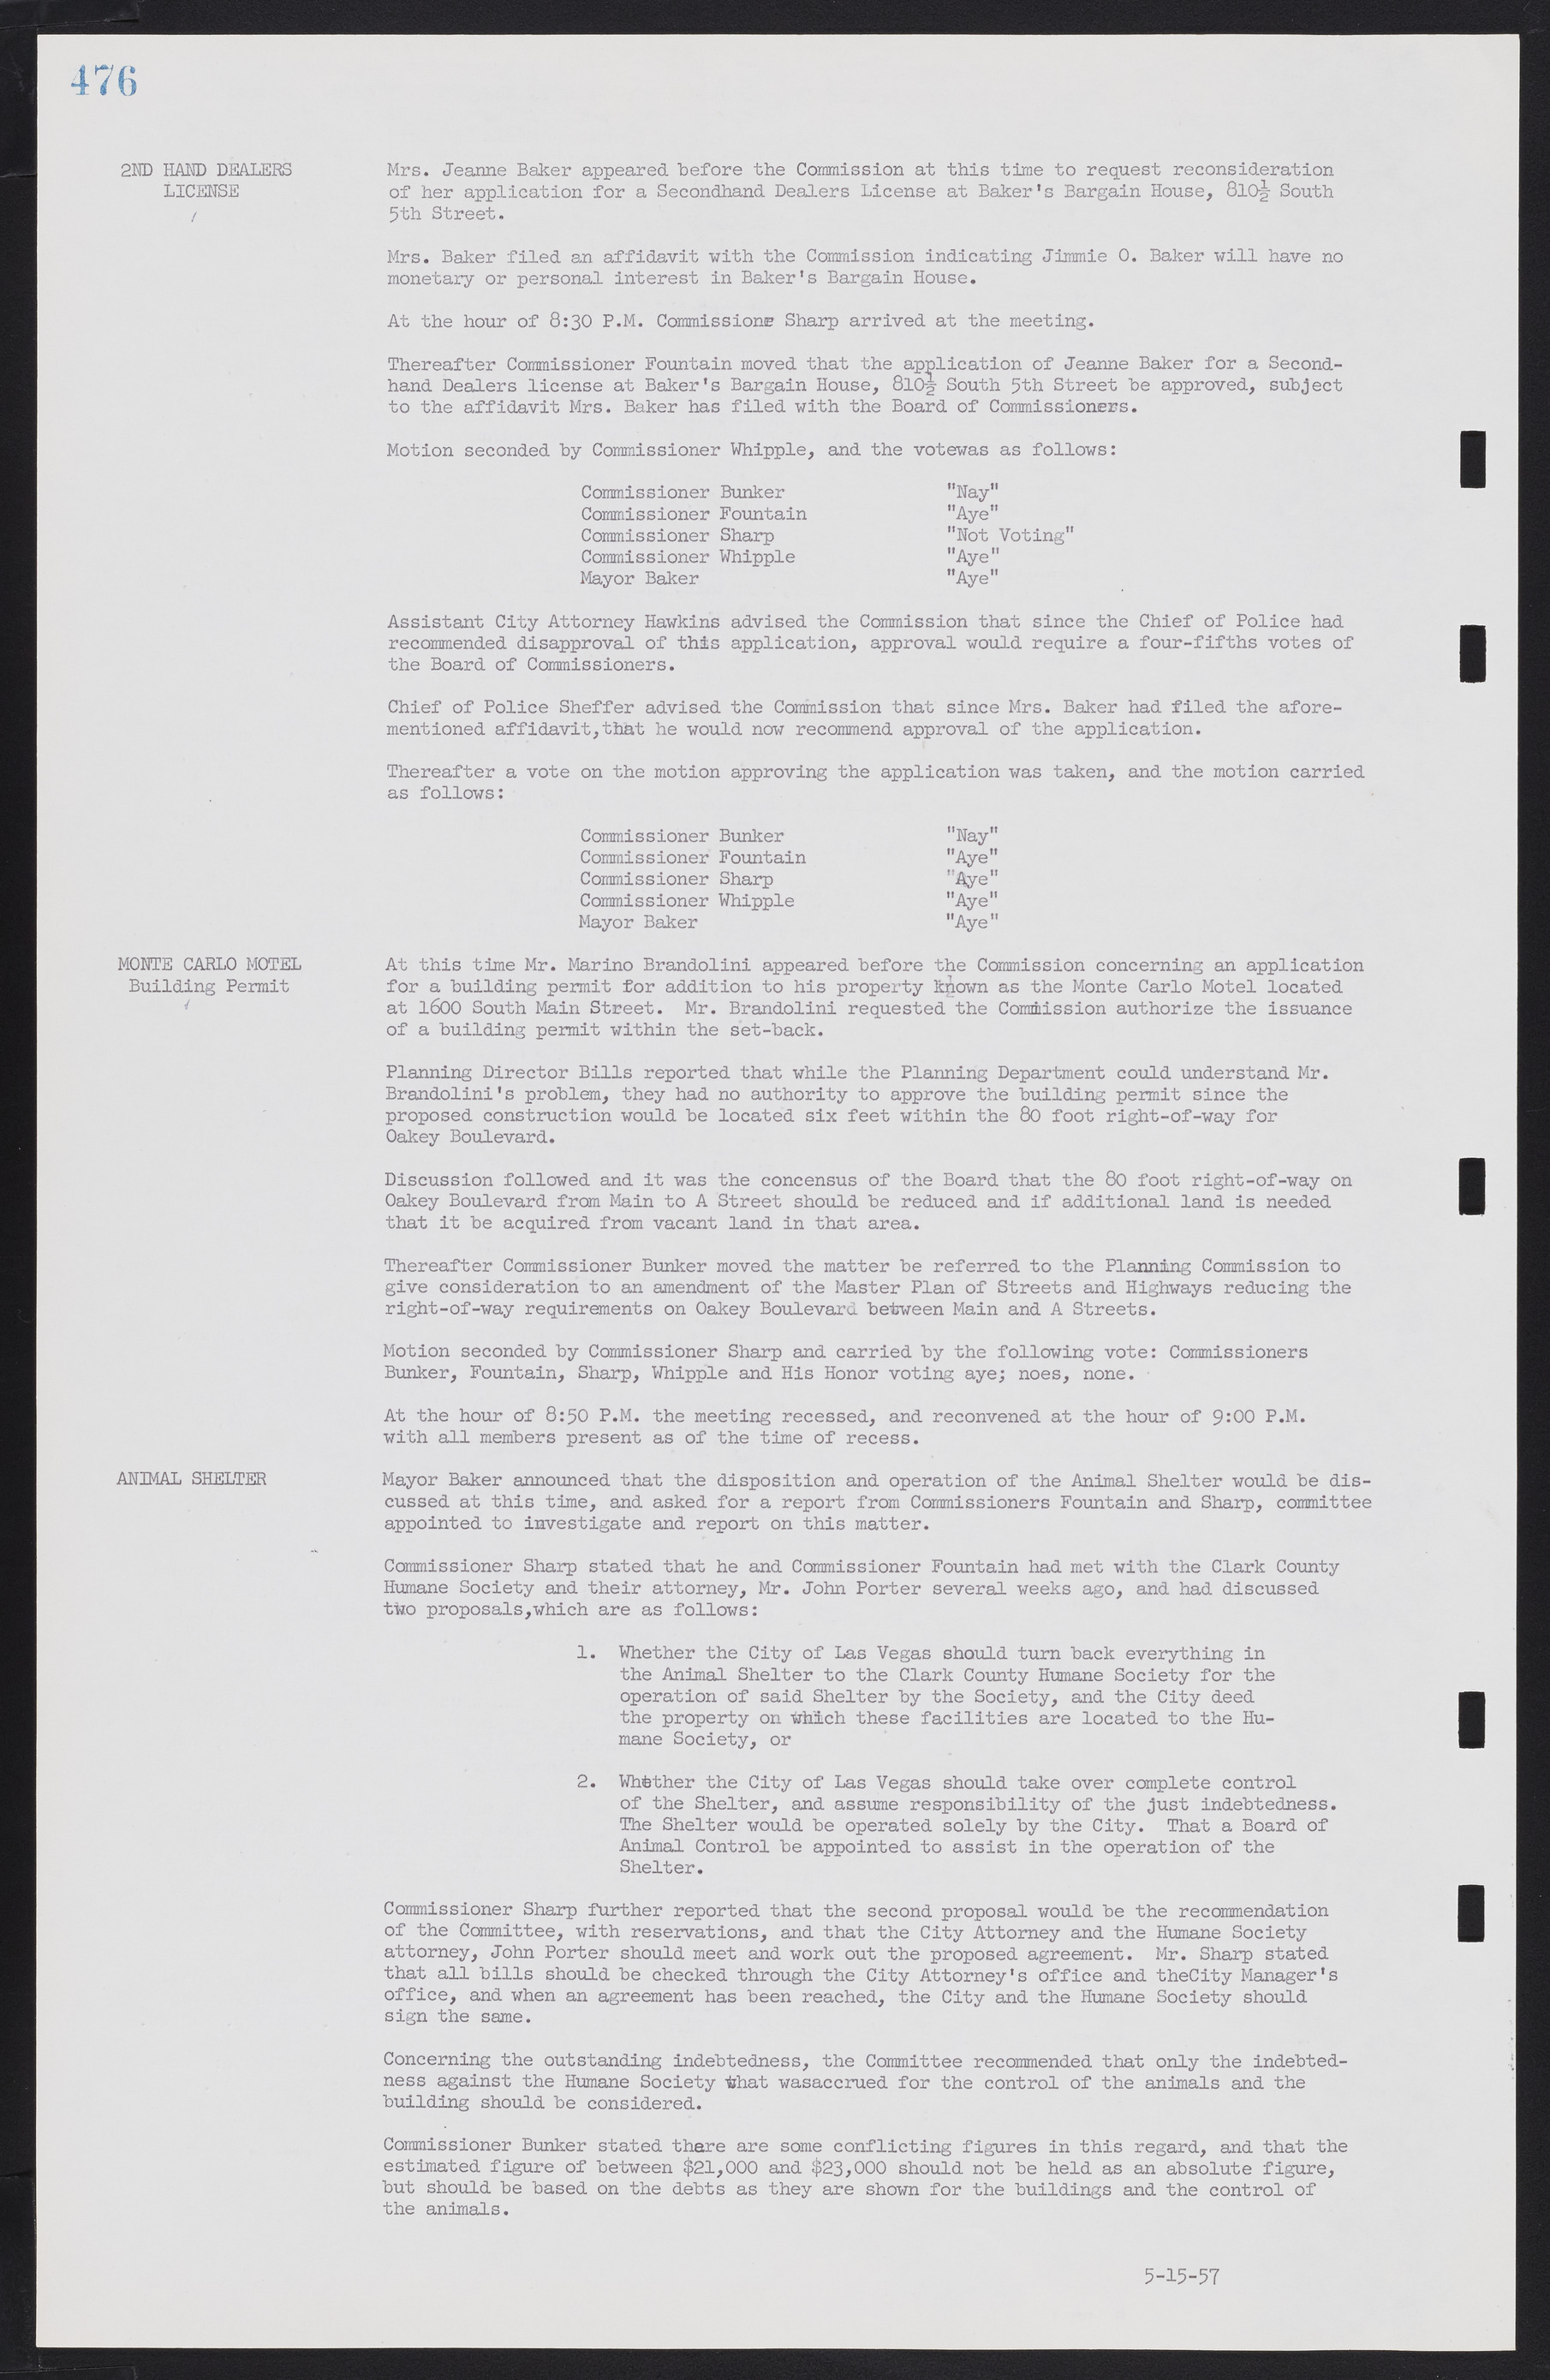 Las Vegas City Commission Minutes, September 21, 1955 to November 20, 1957, lvc000010-496